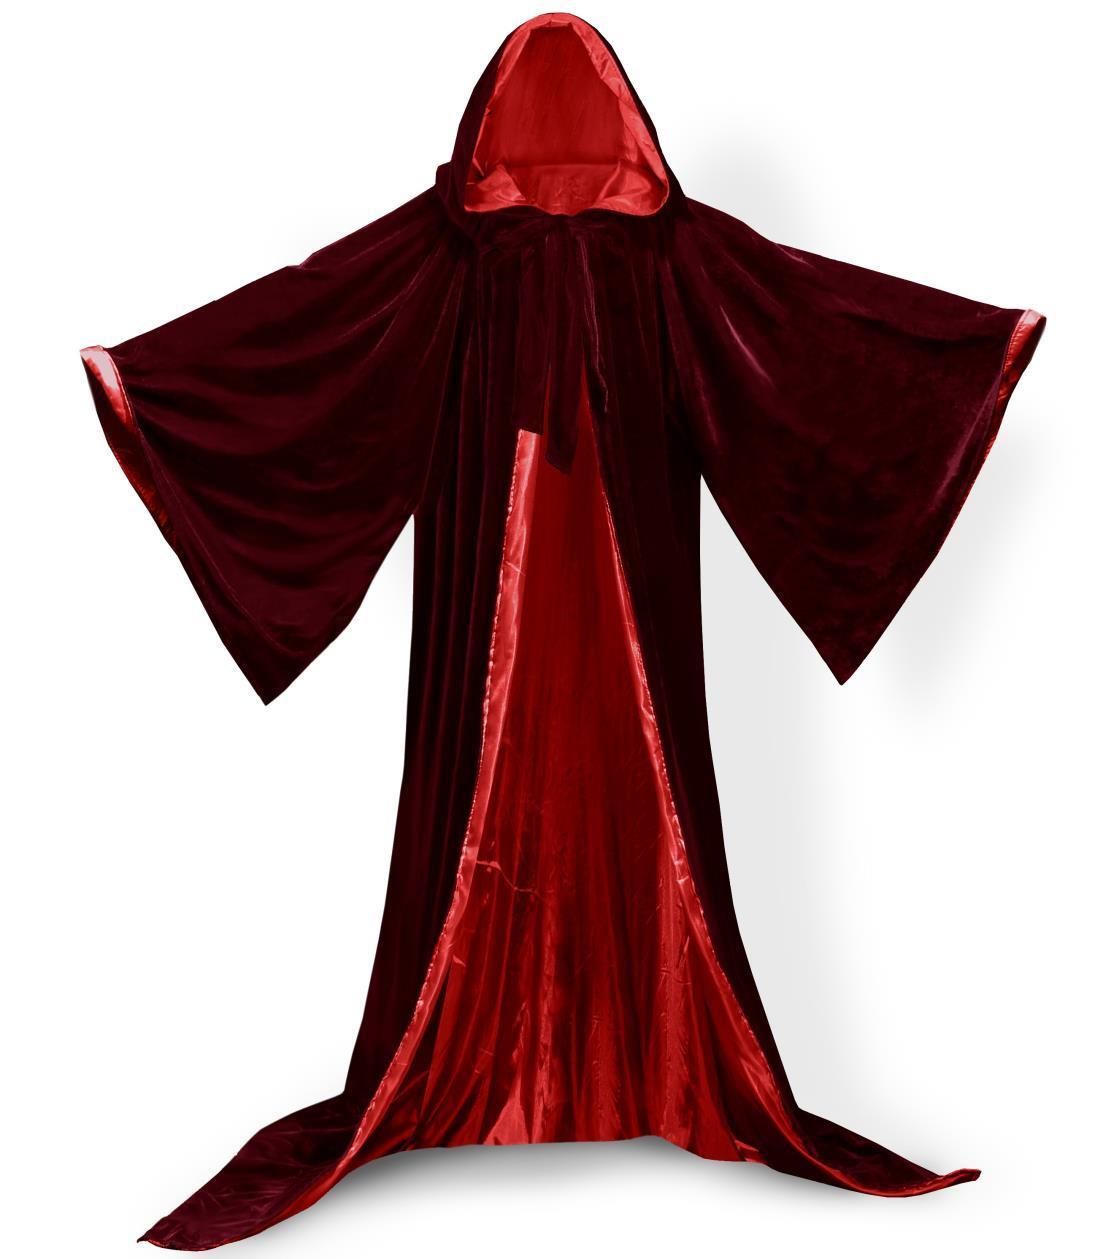 New Stock Black Velvet Robe Hooded Cloak Red Wizard Cloak Wicca LARP Gothic 